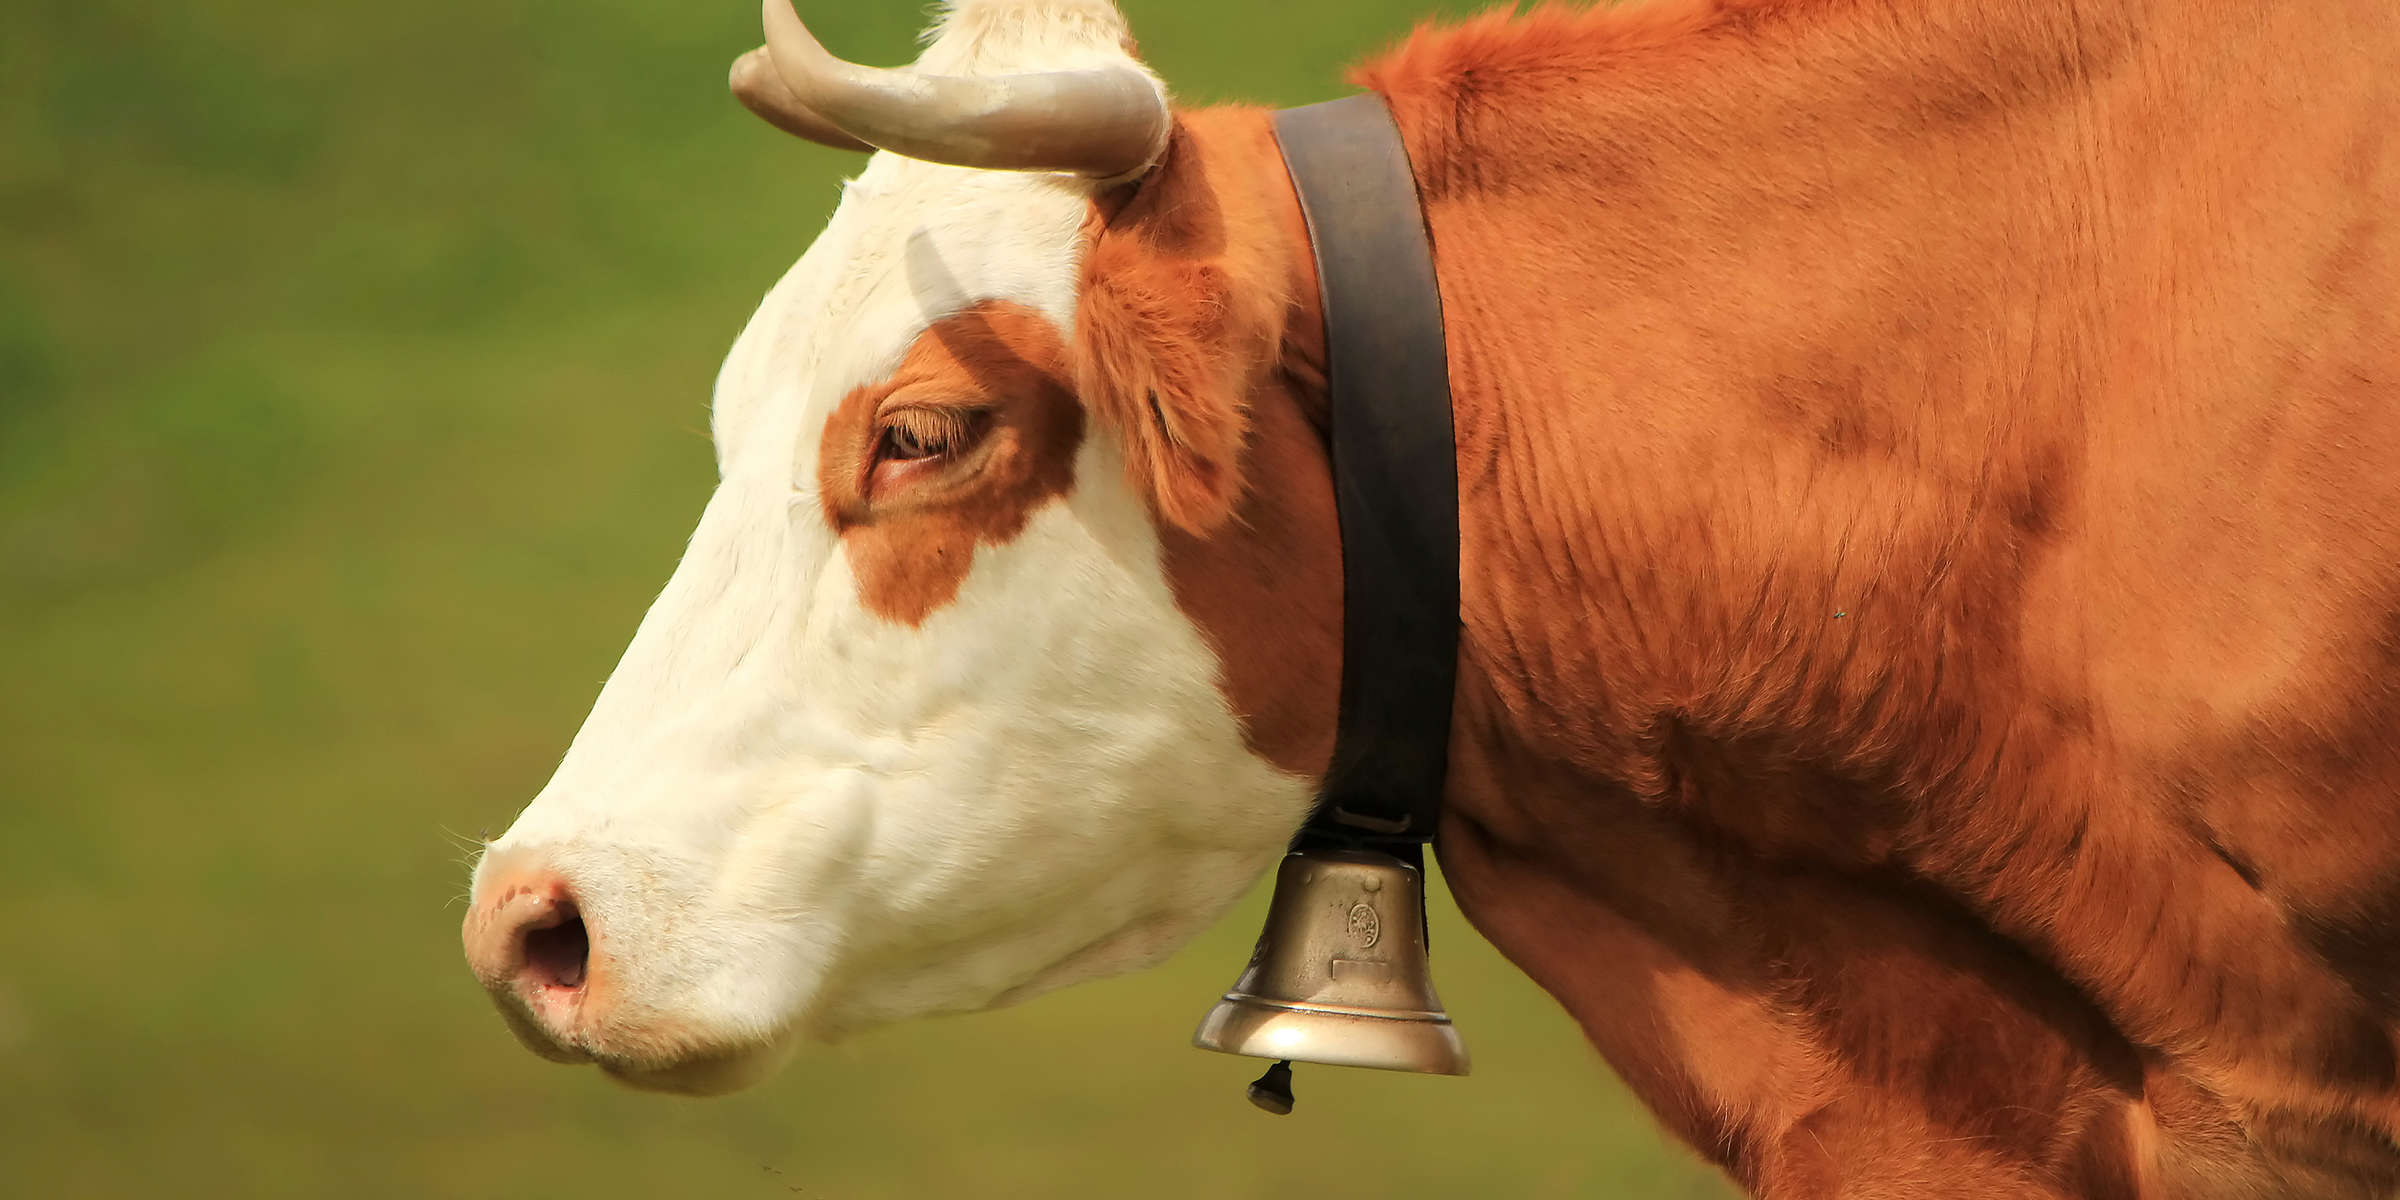 A cow wearing a bell | Source: Shutterstock